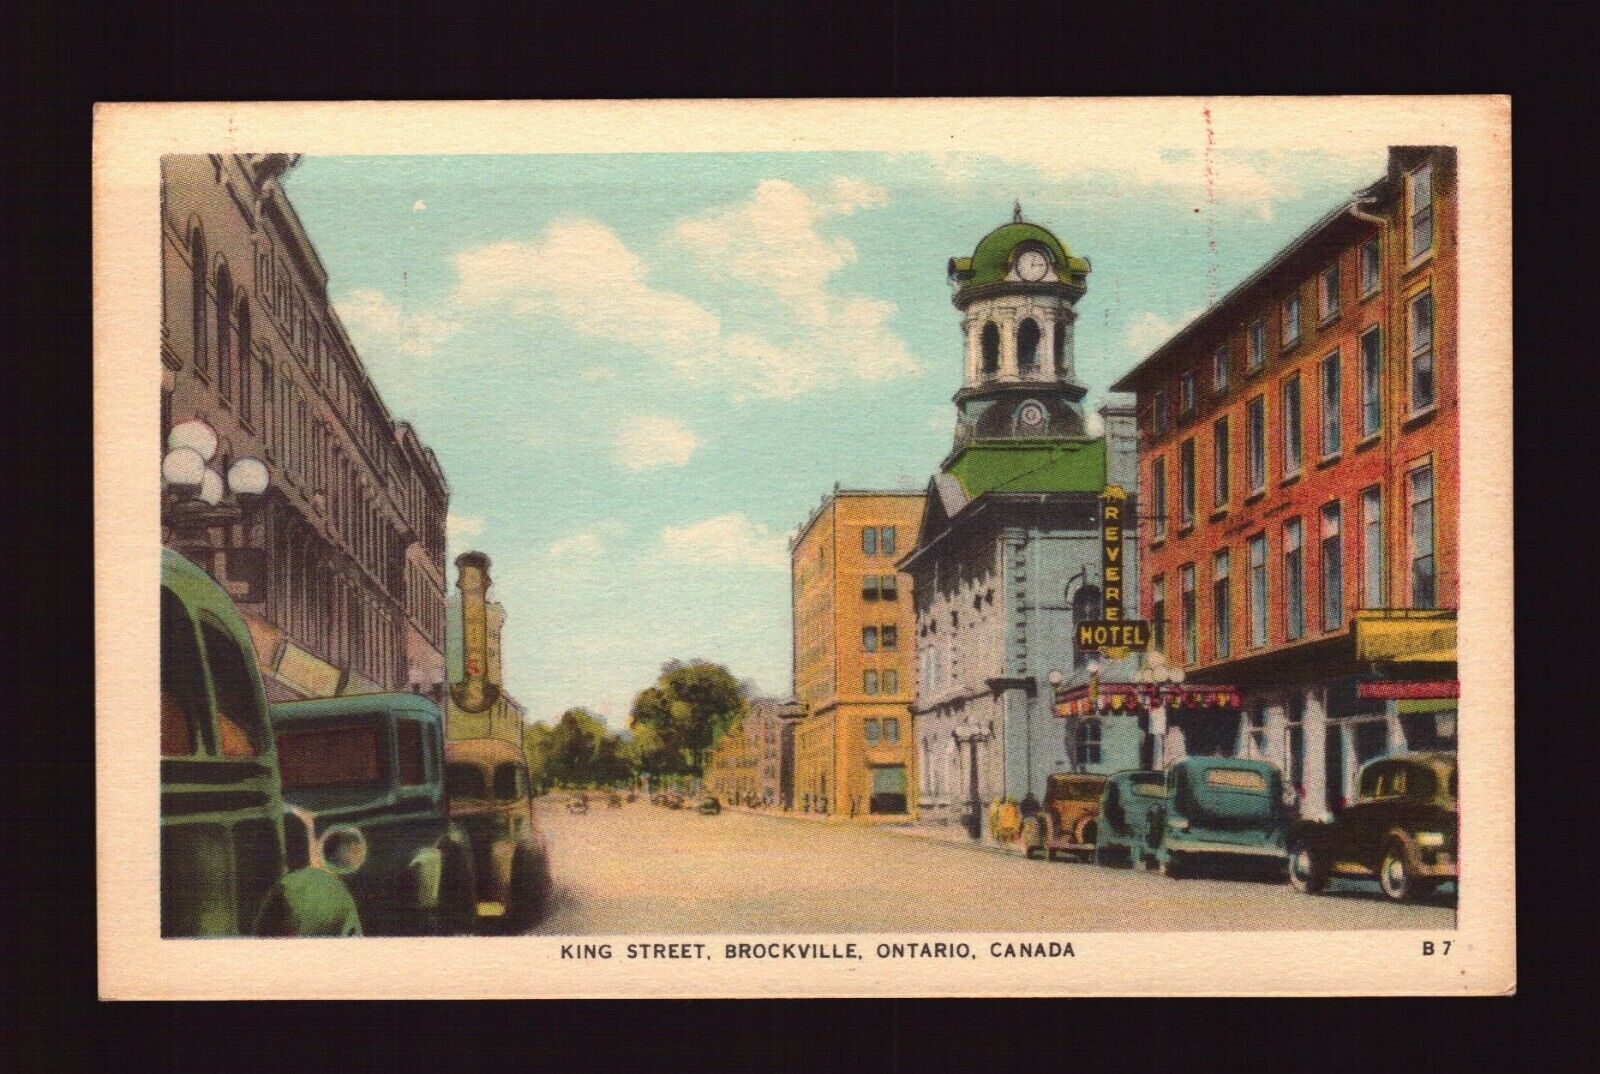 POSTCARD : CANADA - ONTARIO - BROCKVILLE - KING STREET - 1947 BOND STREET SERIES